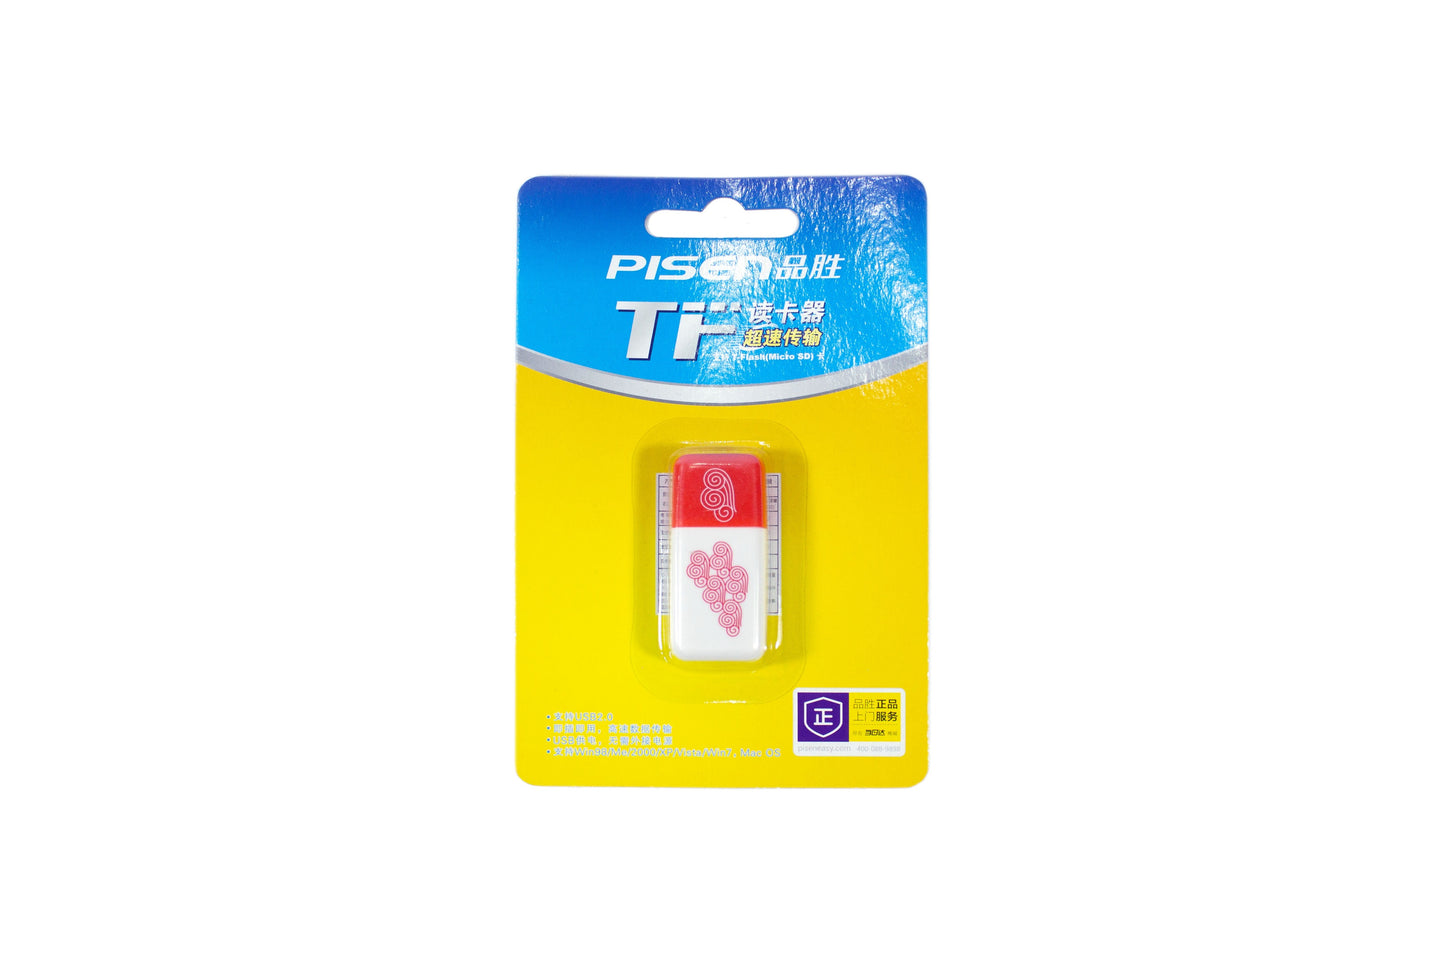 Pisen Card Reader T-Flash (Micro SD)